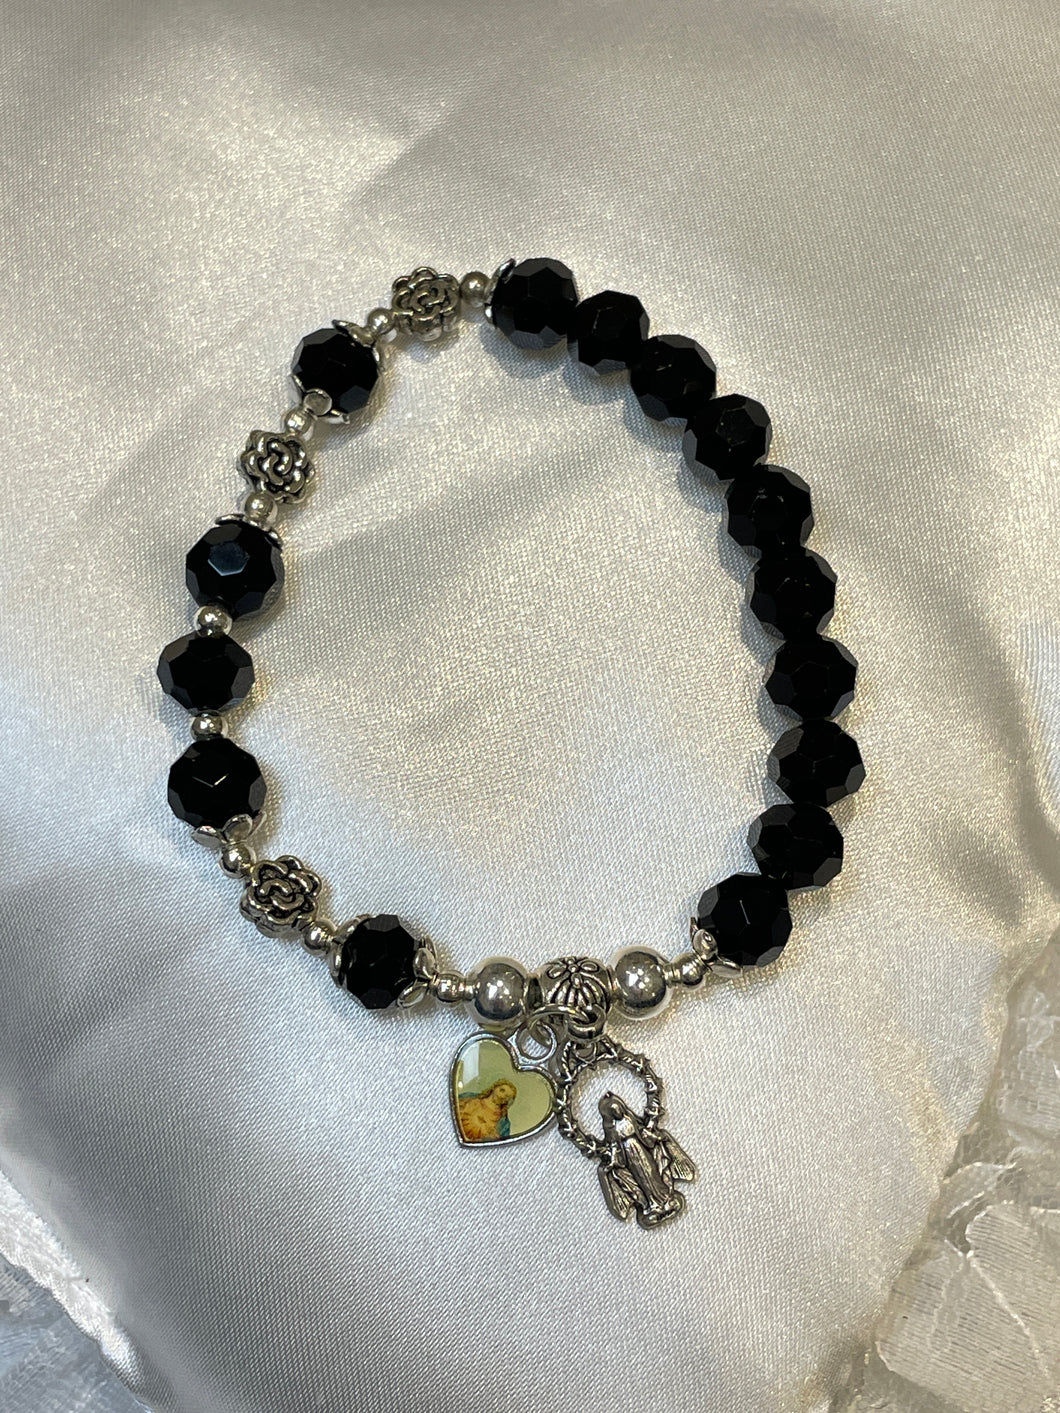 Black Gemstone Rosary Bracelet with Sacred Heart of Jesus Image Charm